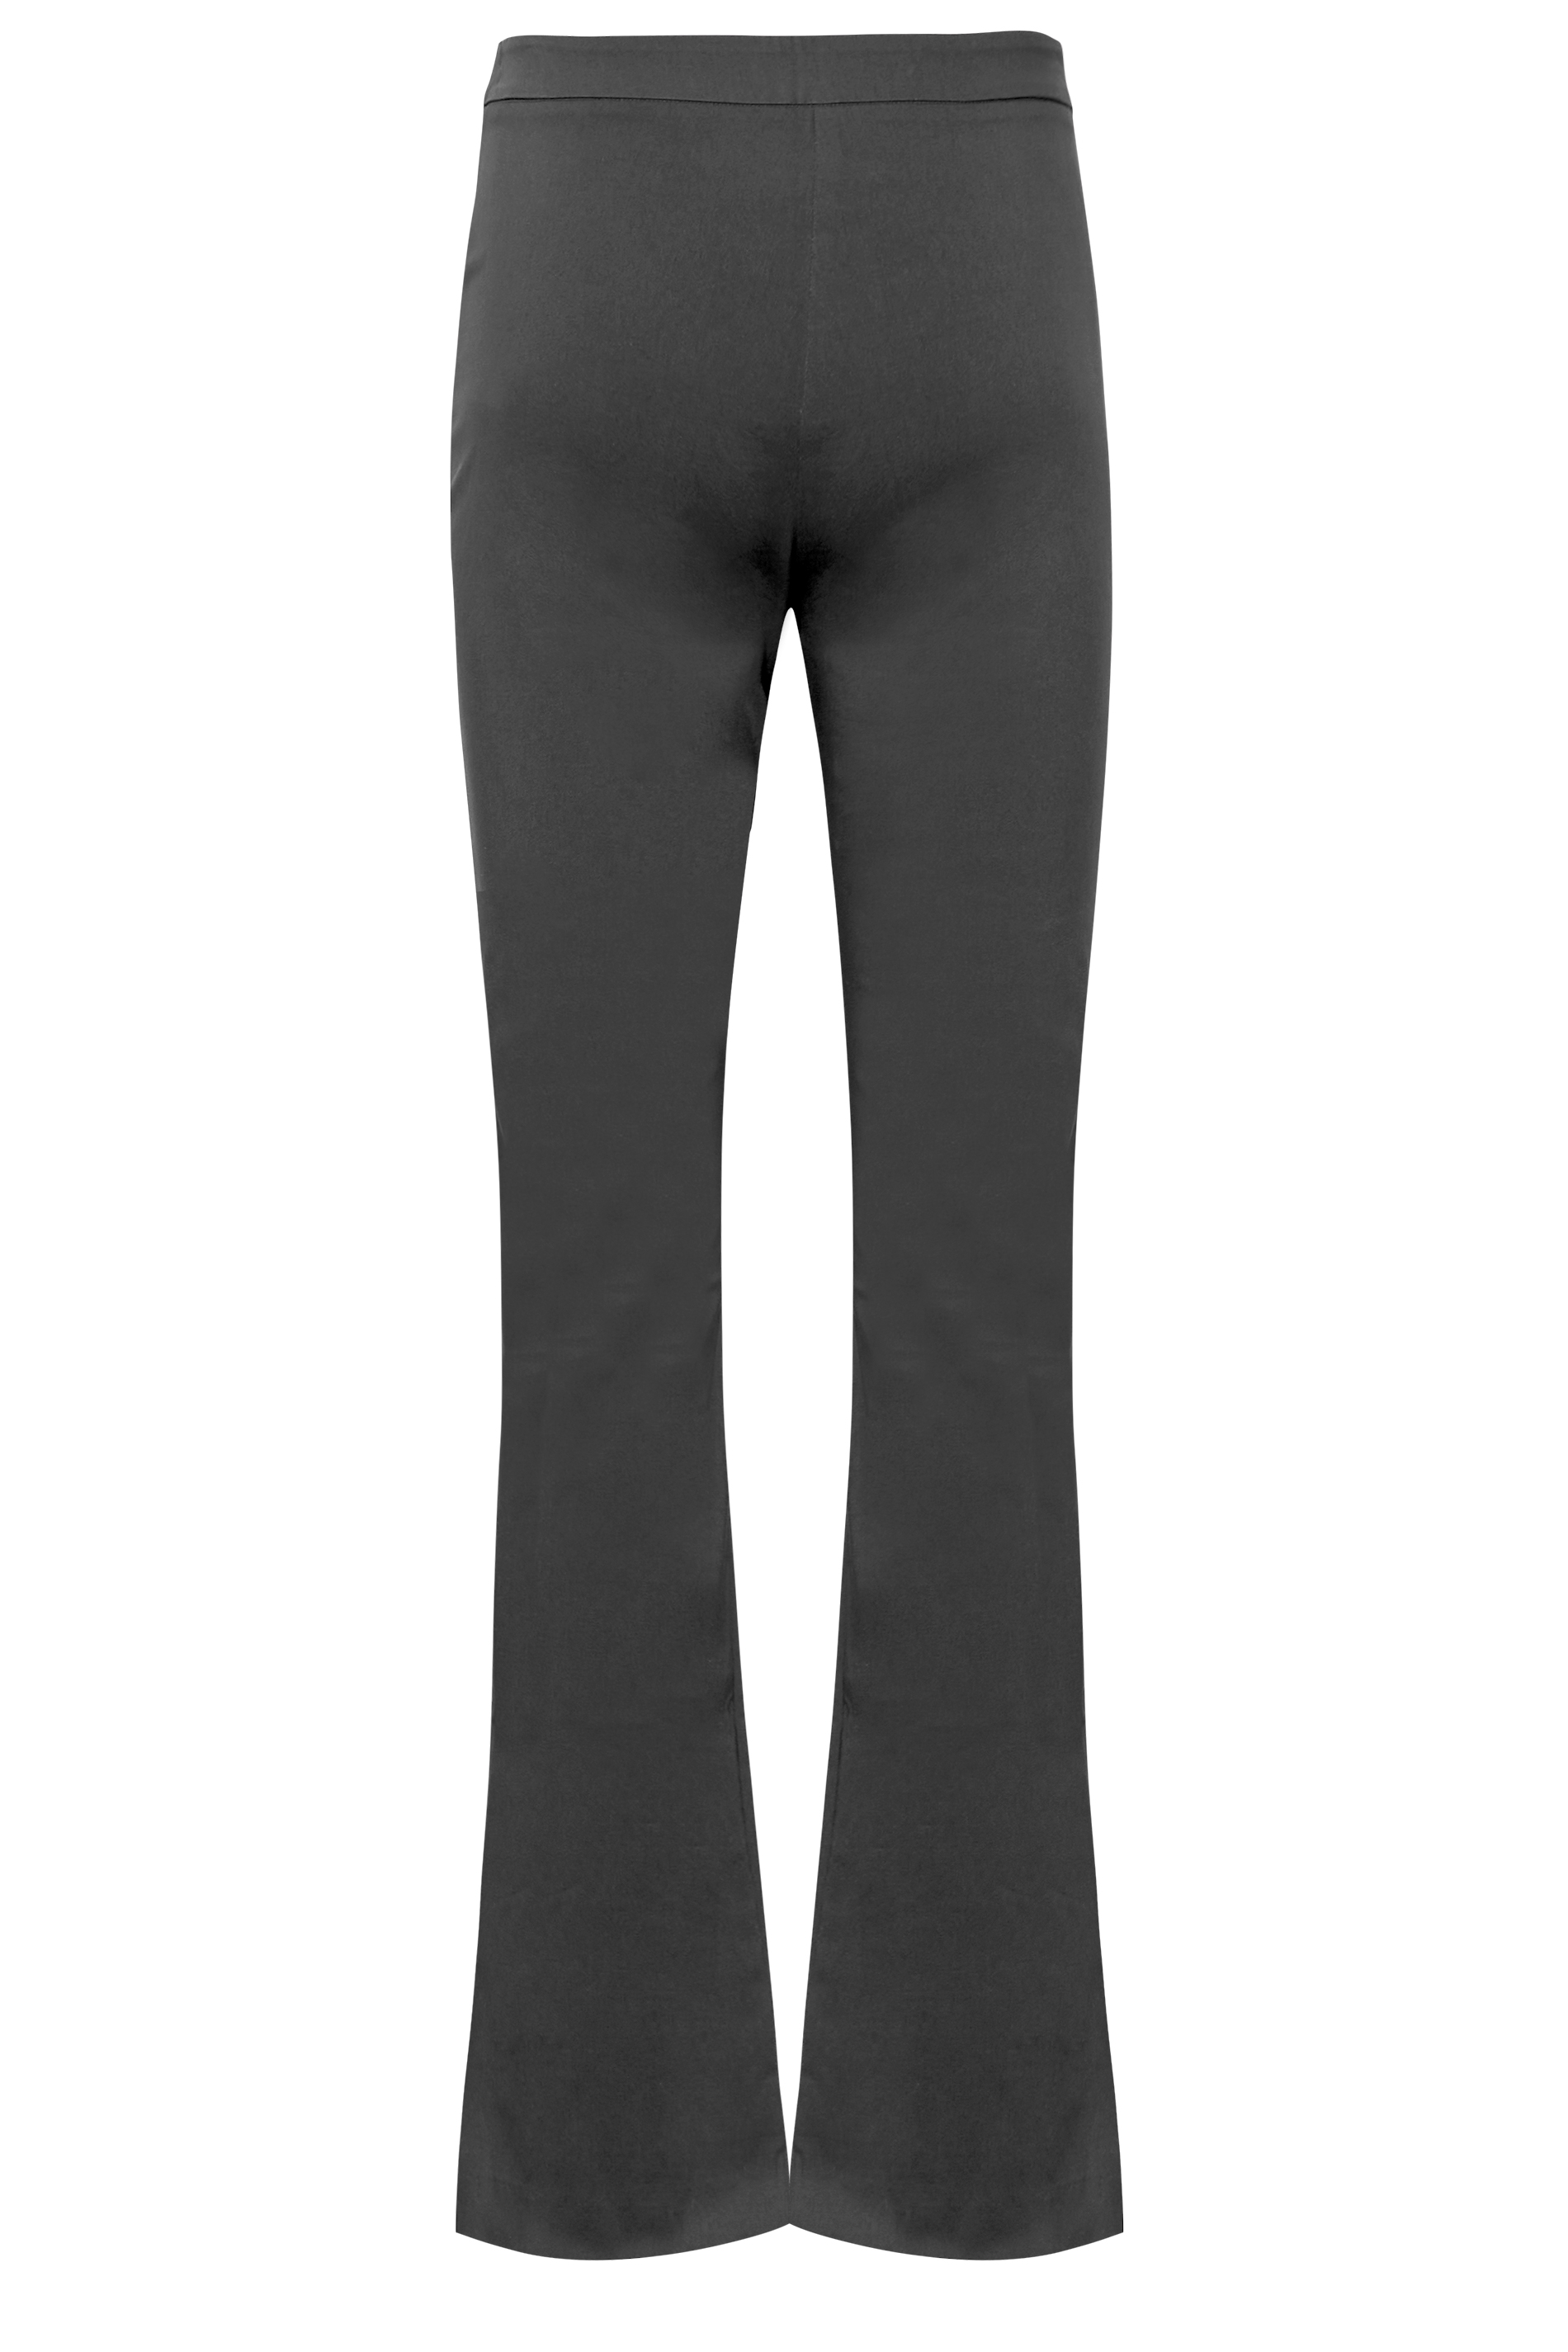 LTS Tall Women's Grey Bi Stretch Bootcut Trousers